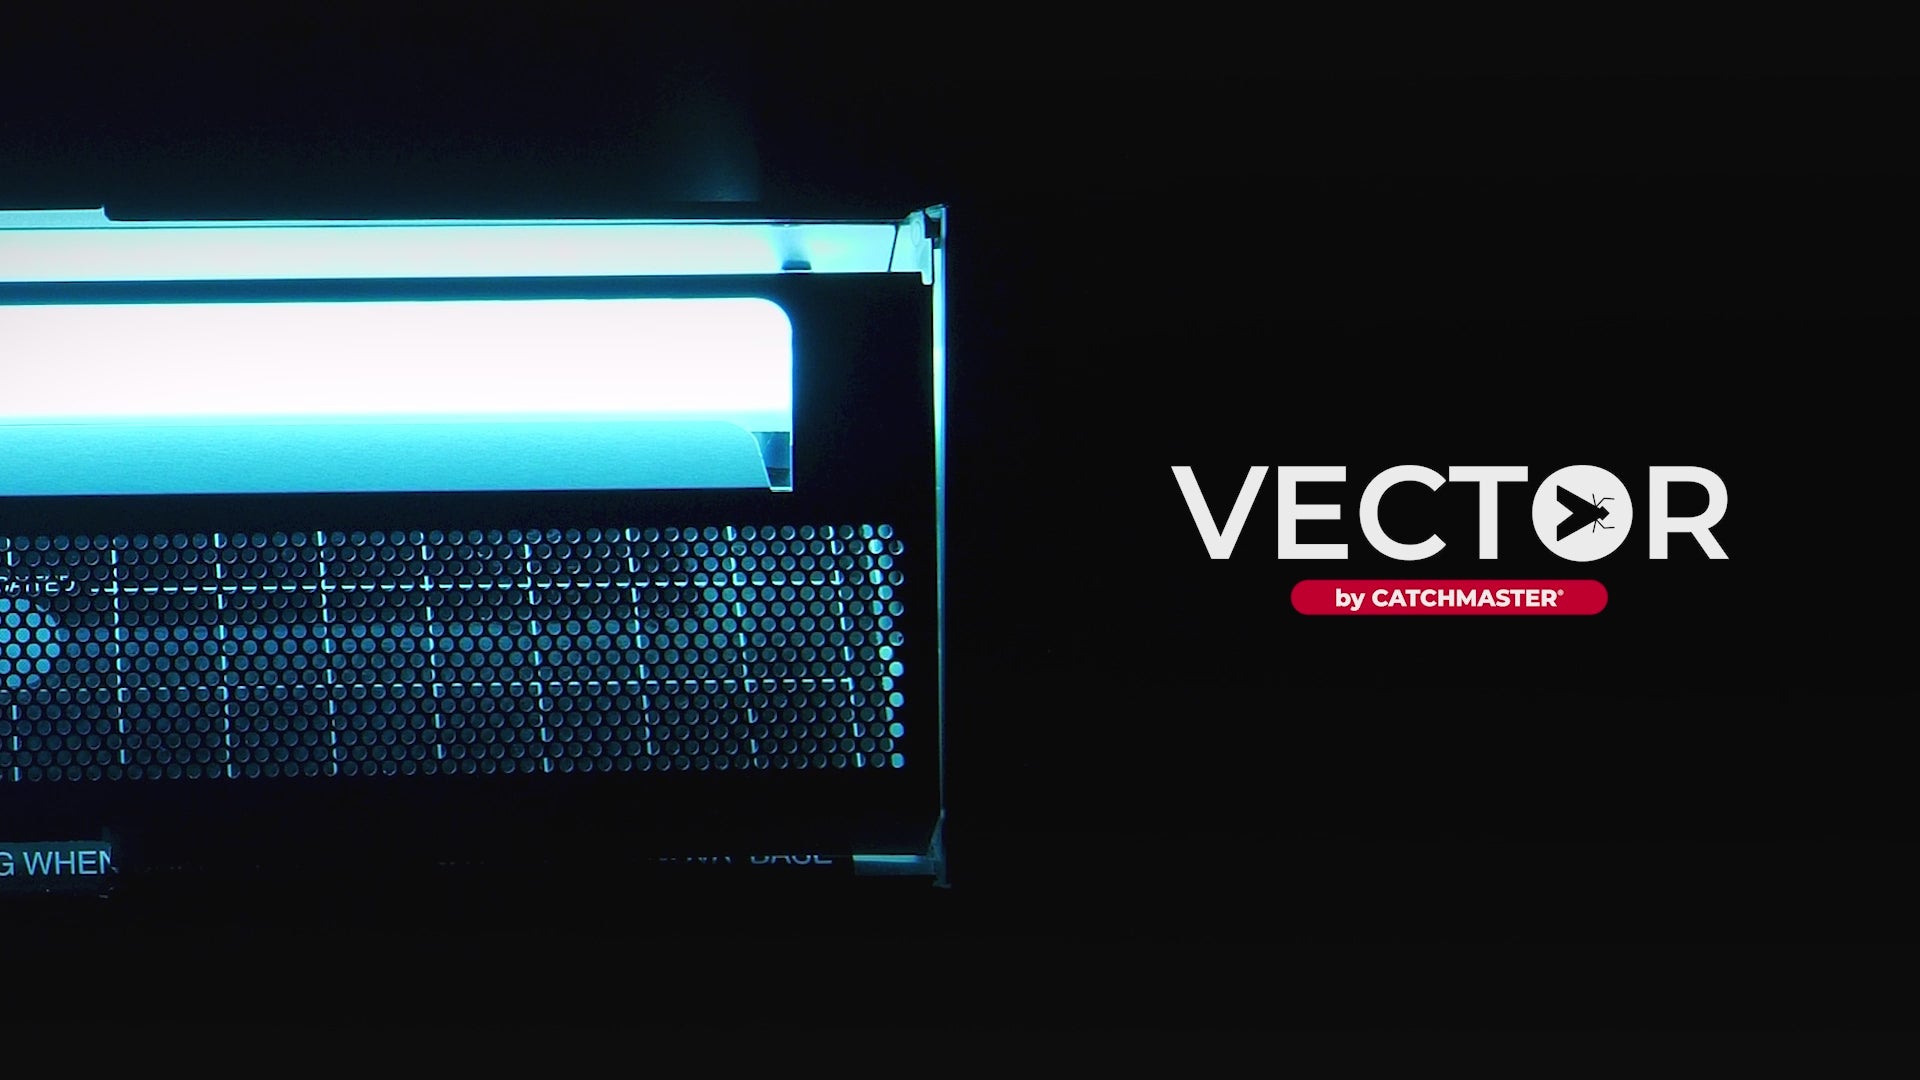 Vector Plasma One UV Light Fly Trap